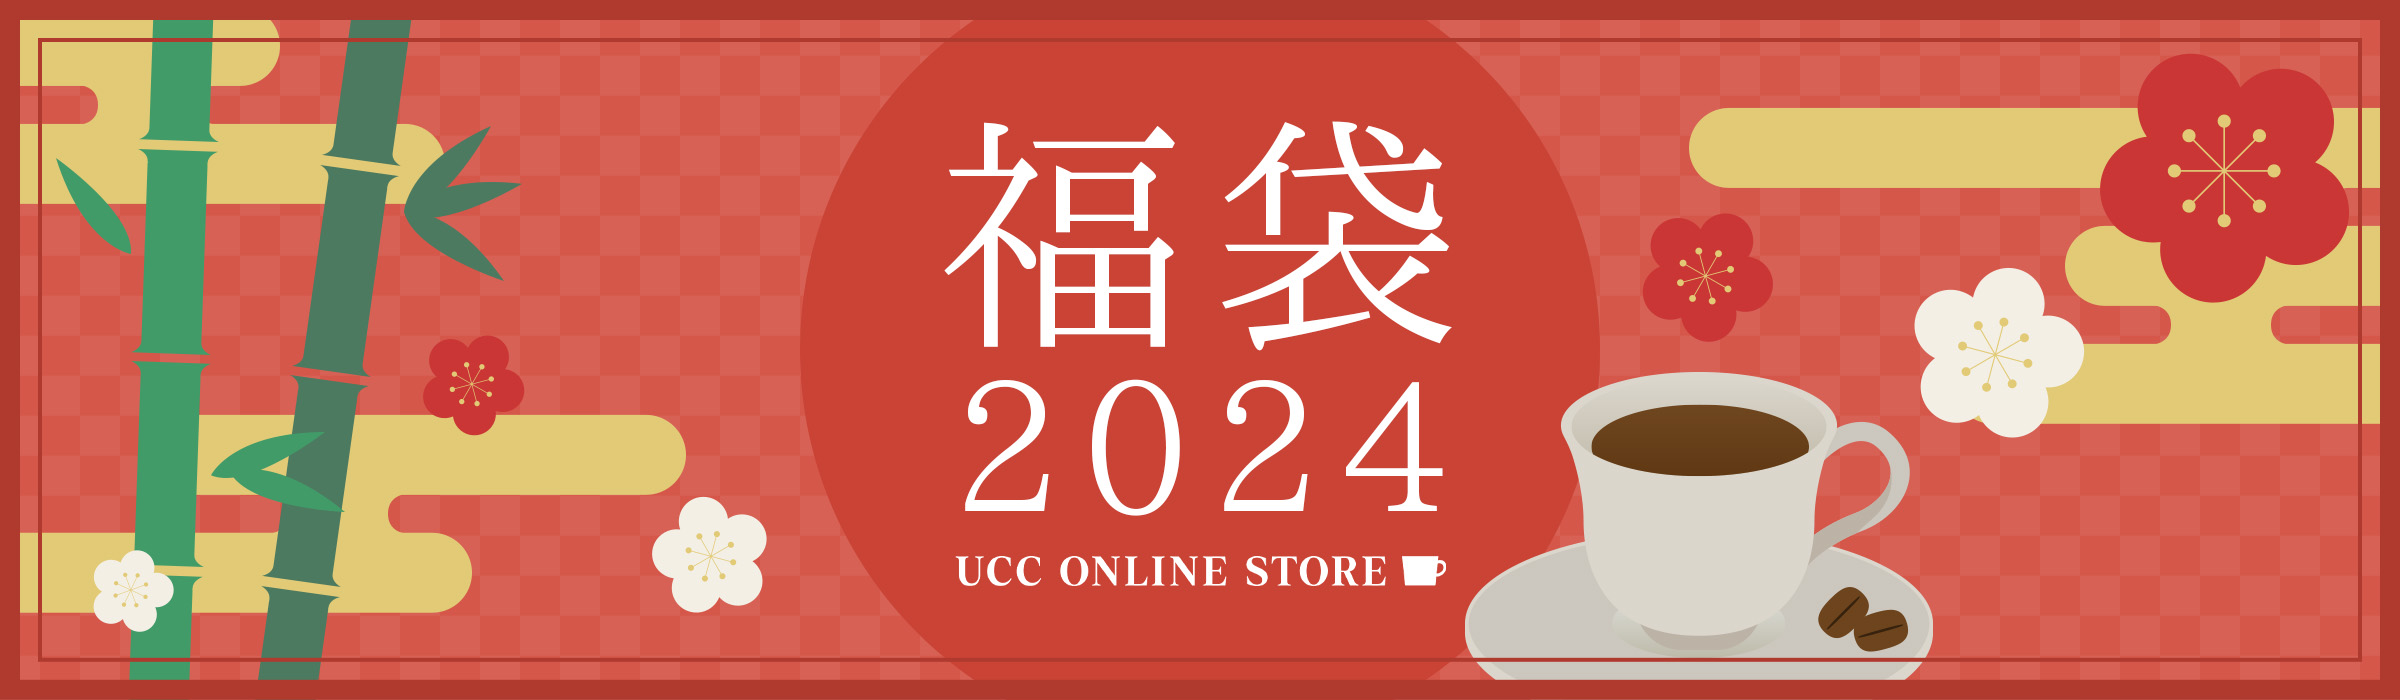 福袋2024 UCC ONLINE STORE